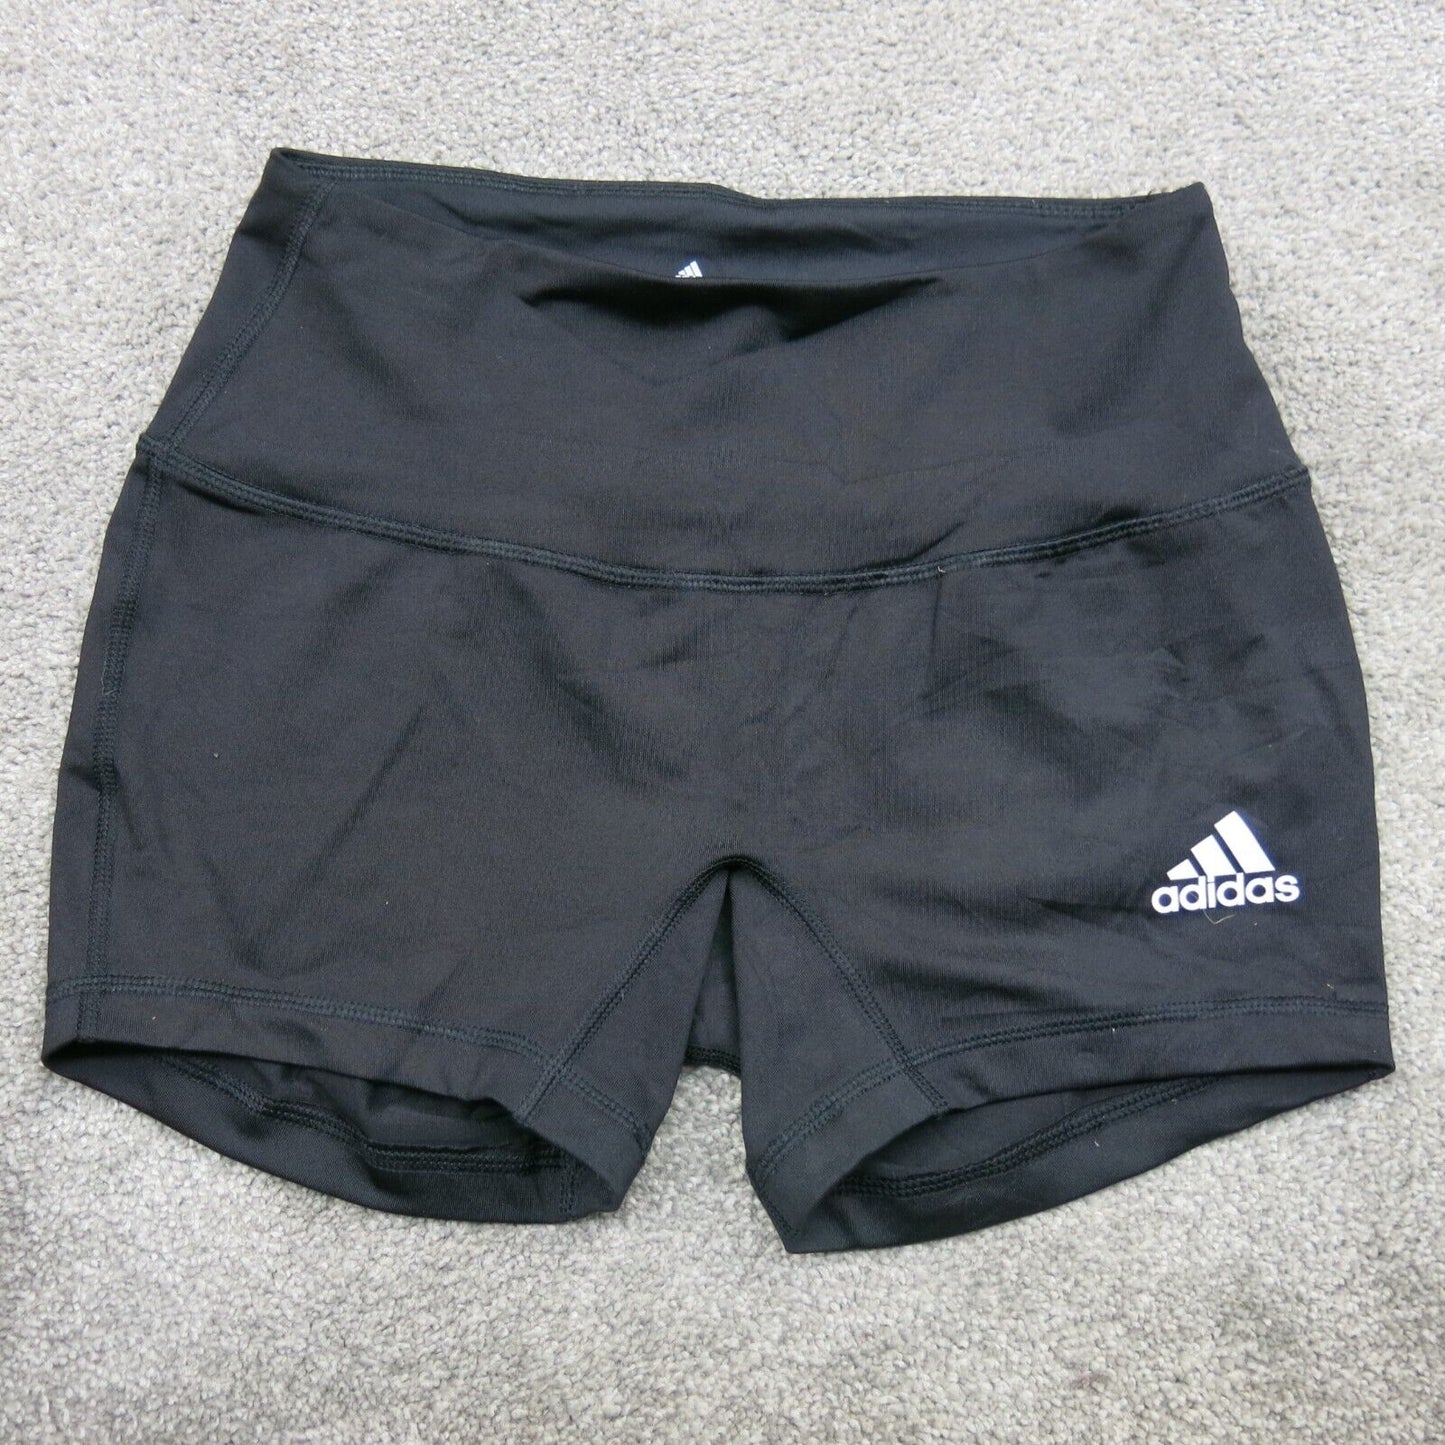 Adidas Shorts Women Size Small Solid Black Calamite Training Athletic Drawstring